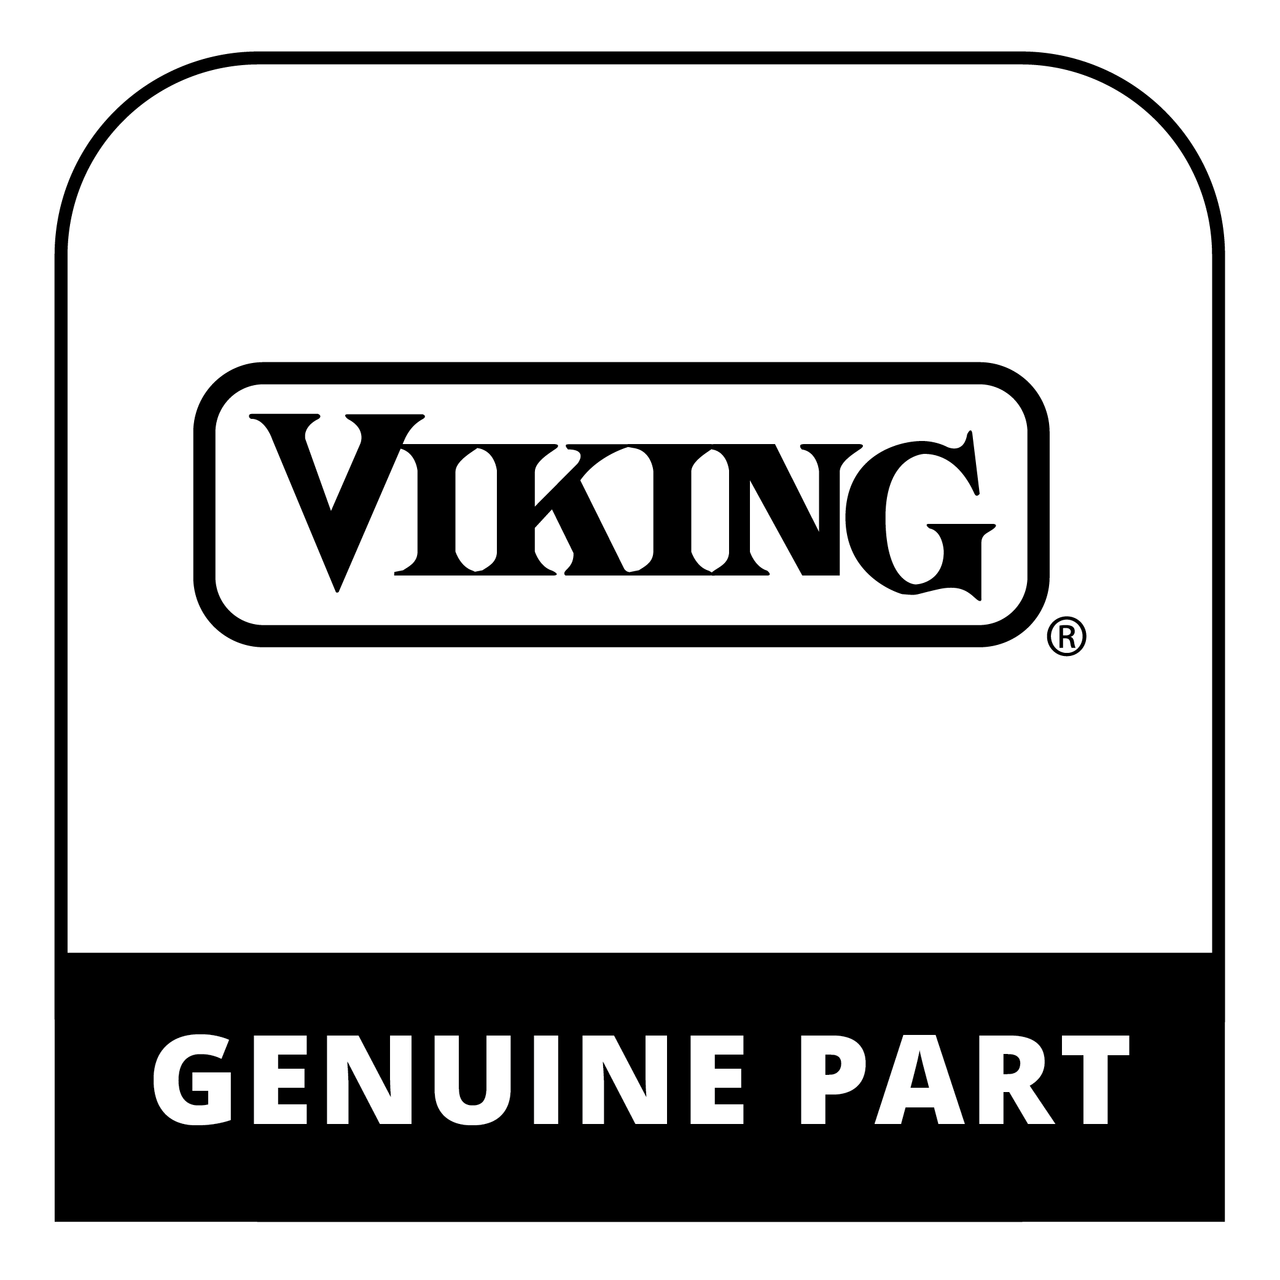 Viking 009403-000 - Tubing, Flex, Sst, 3/16Cc X 28" - Genuine Viking Part